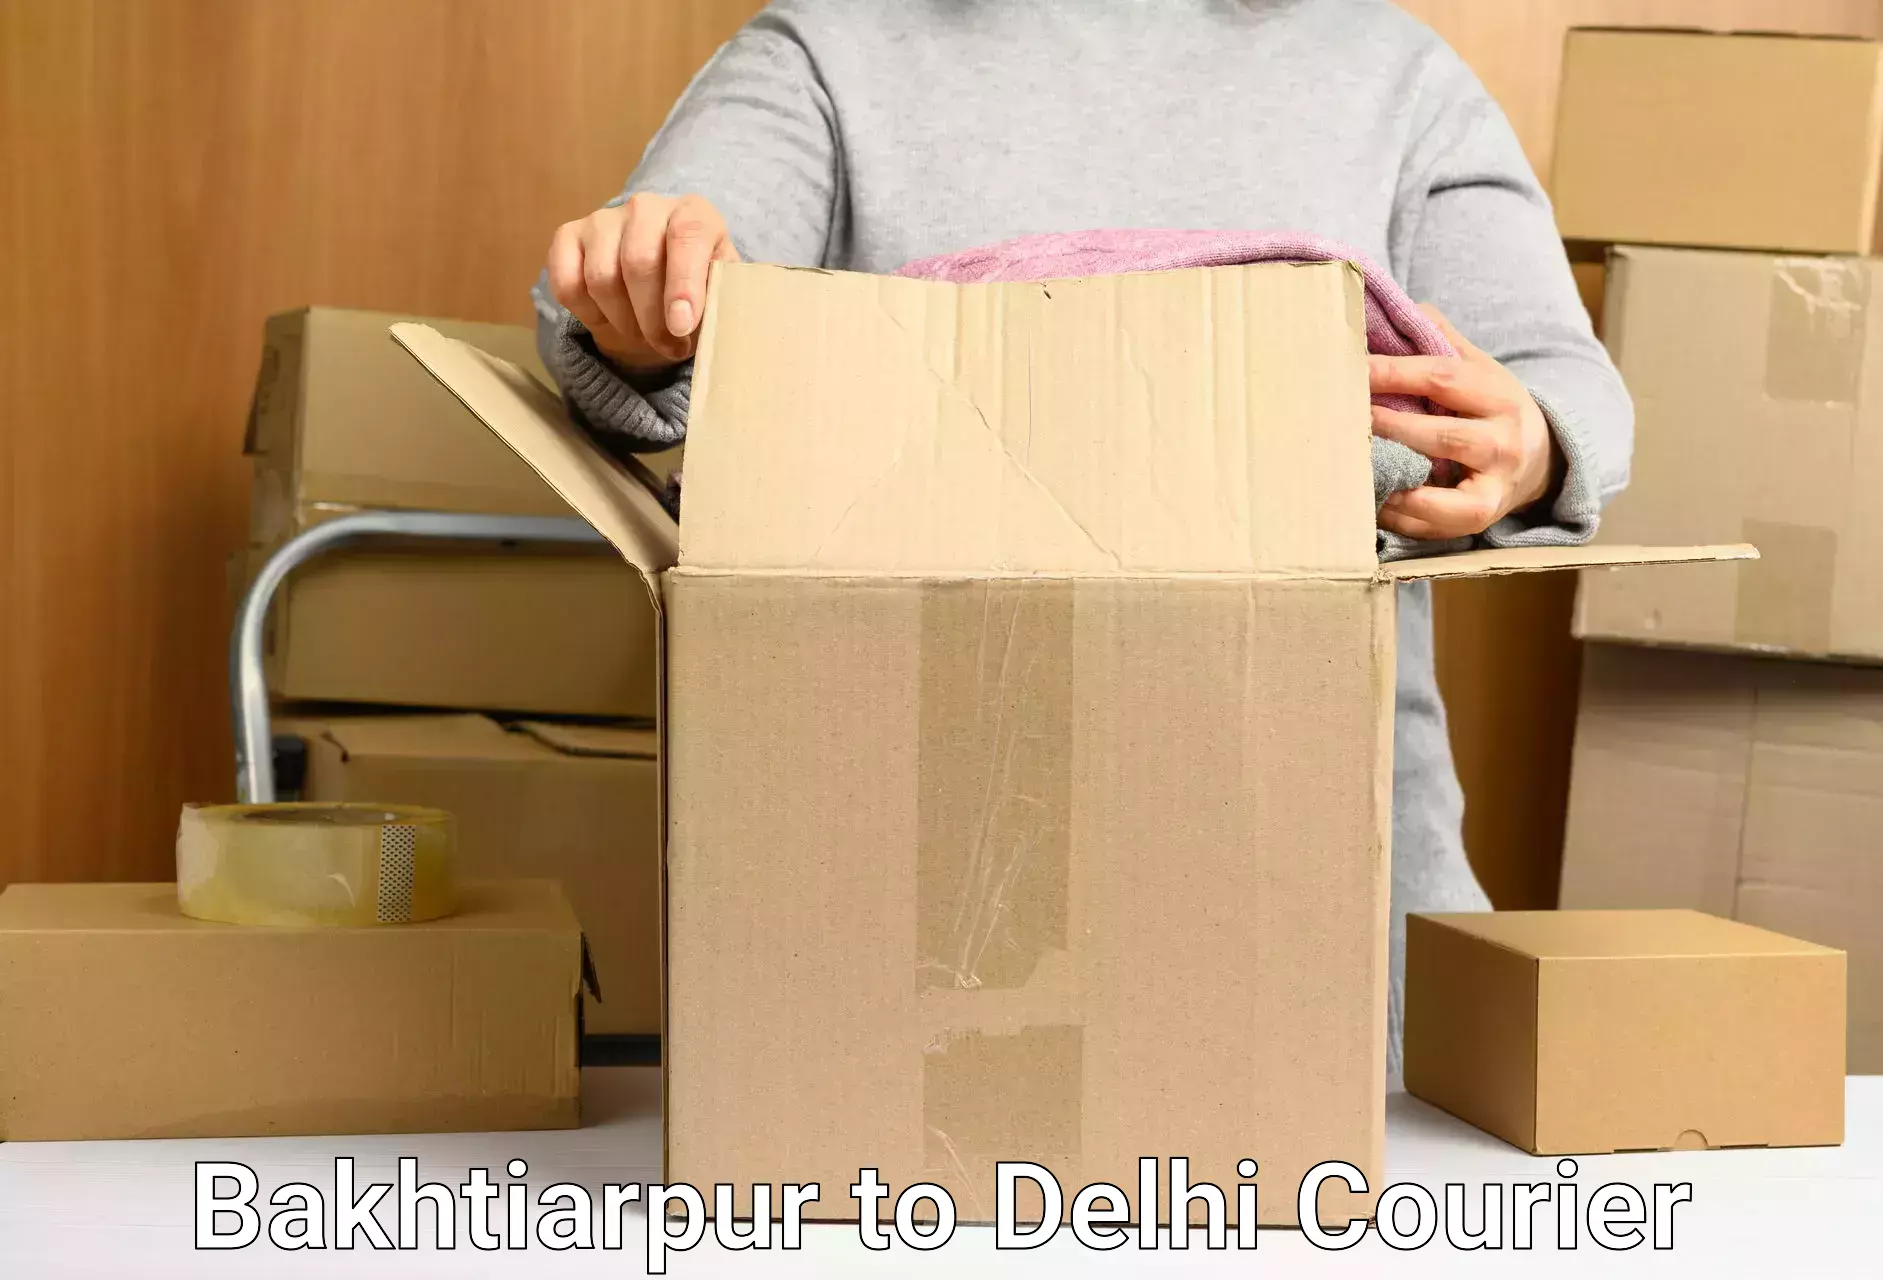 Courier service partnerships Bakhtiarpur to East Delhi